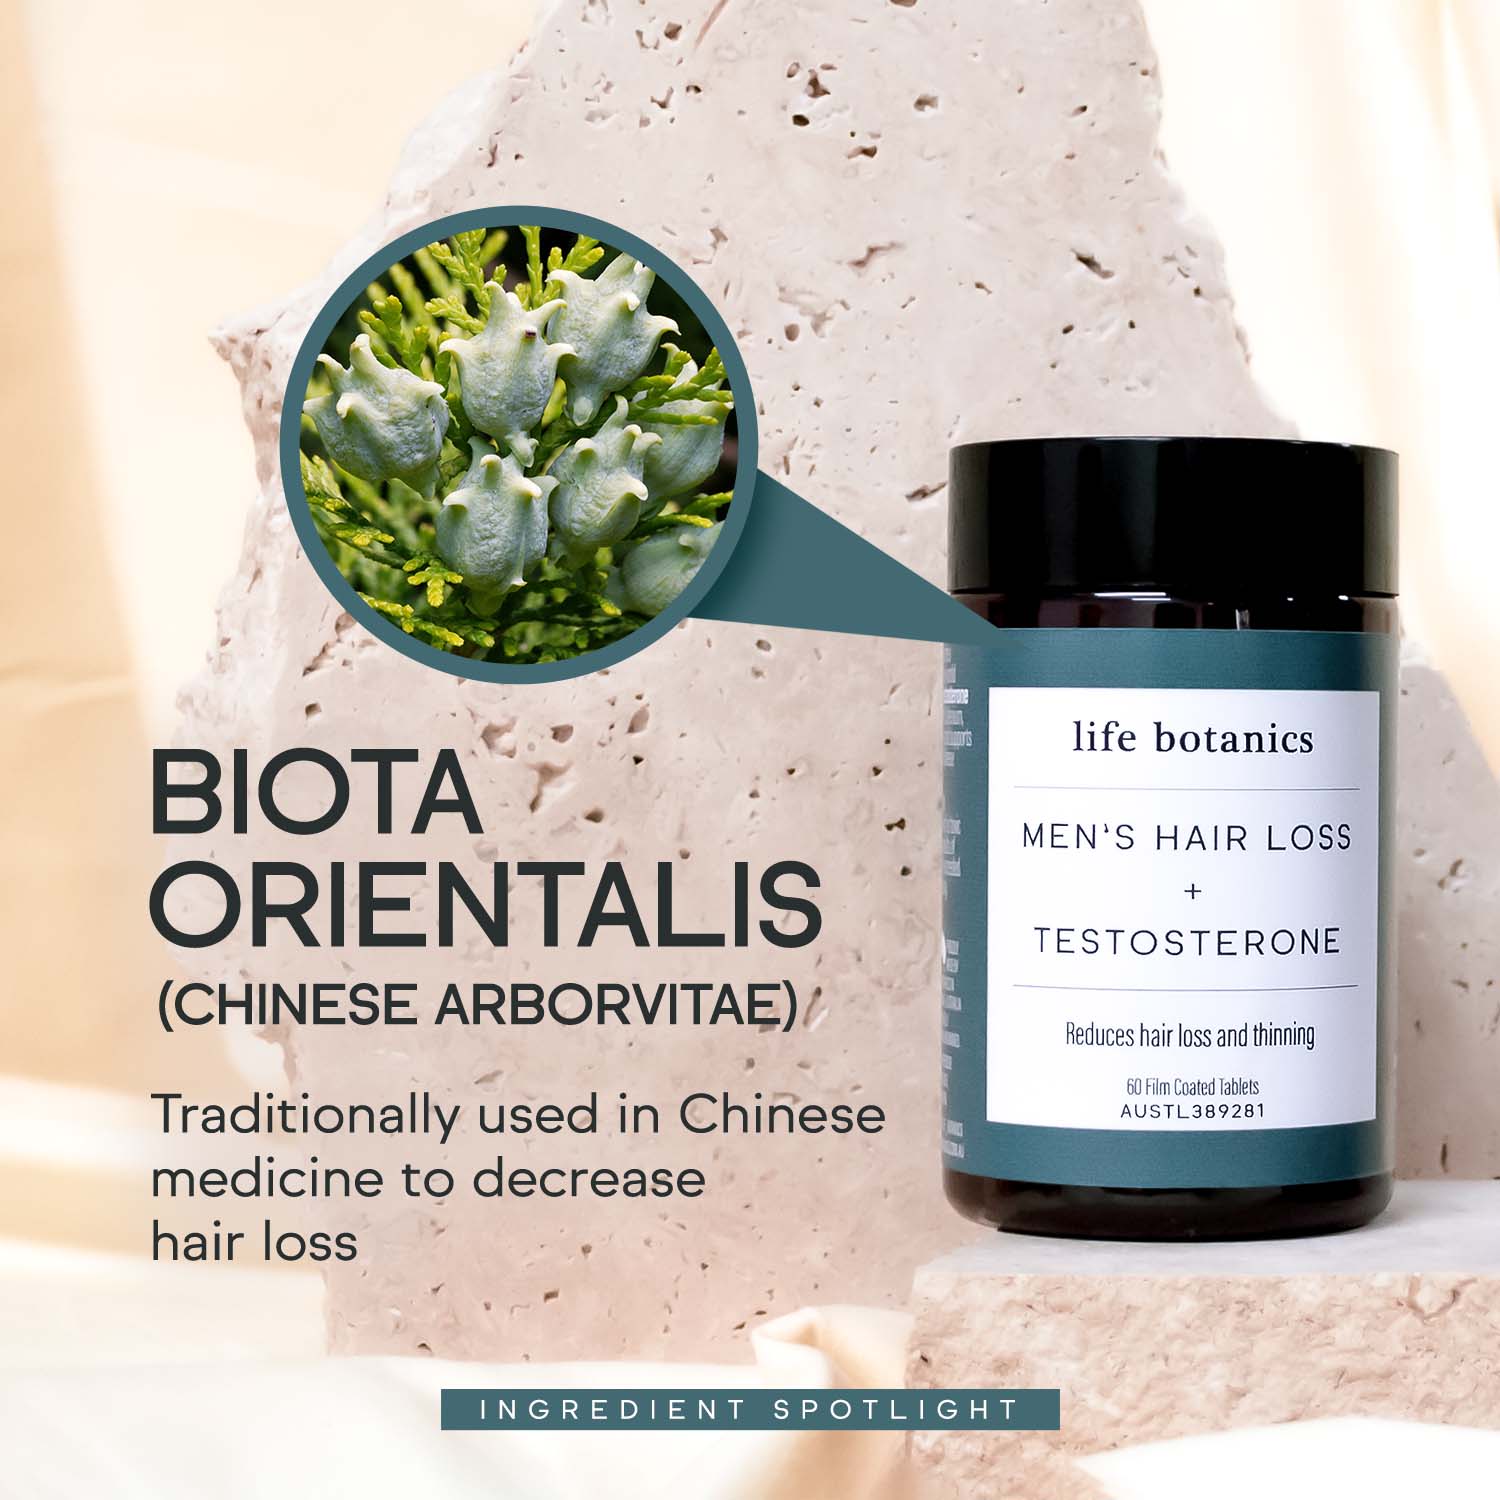 life botanics Men's Hair Loss + Testosterone Biota Orientalis